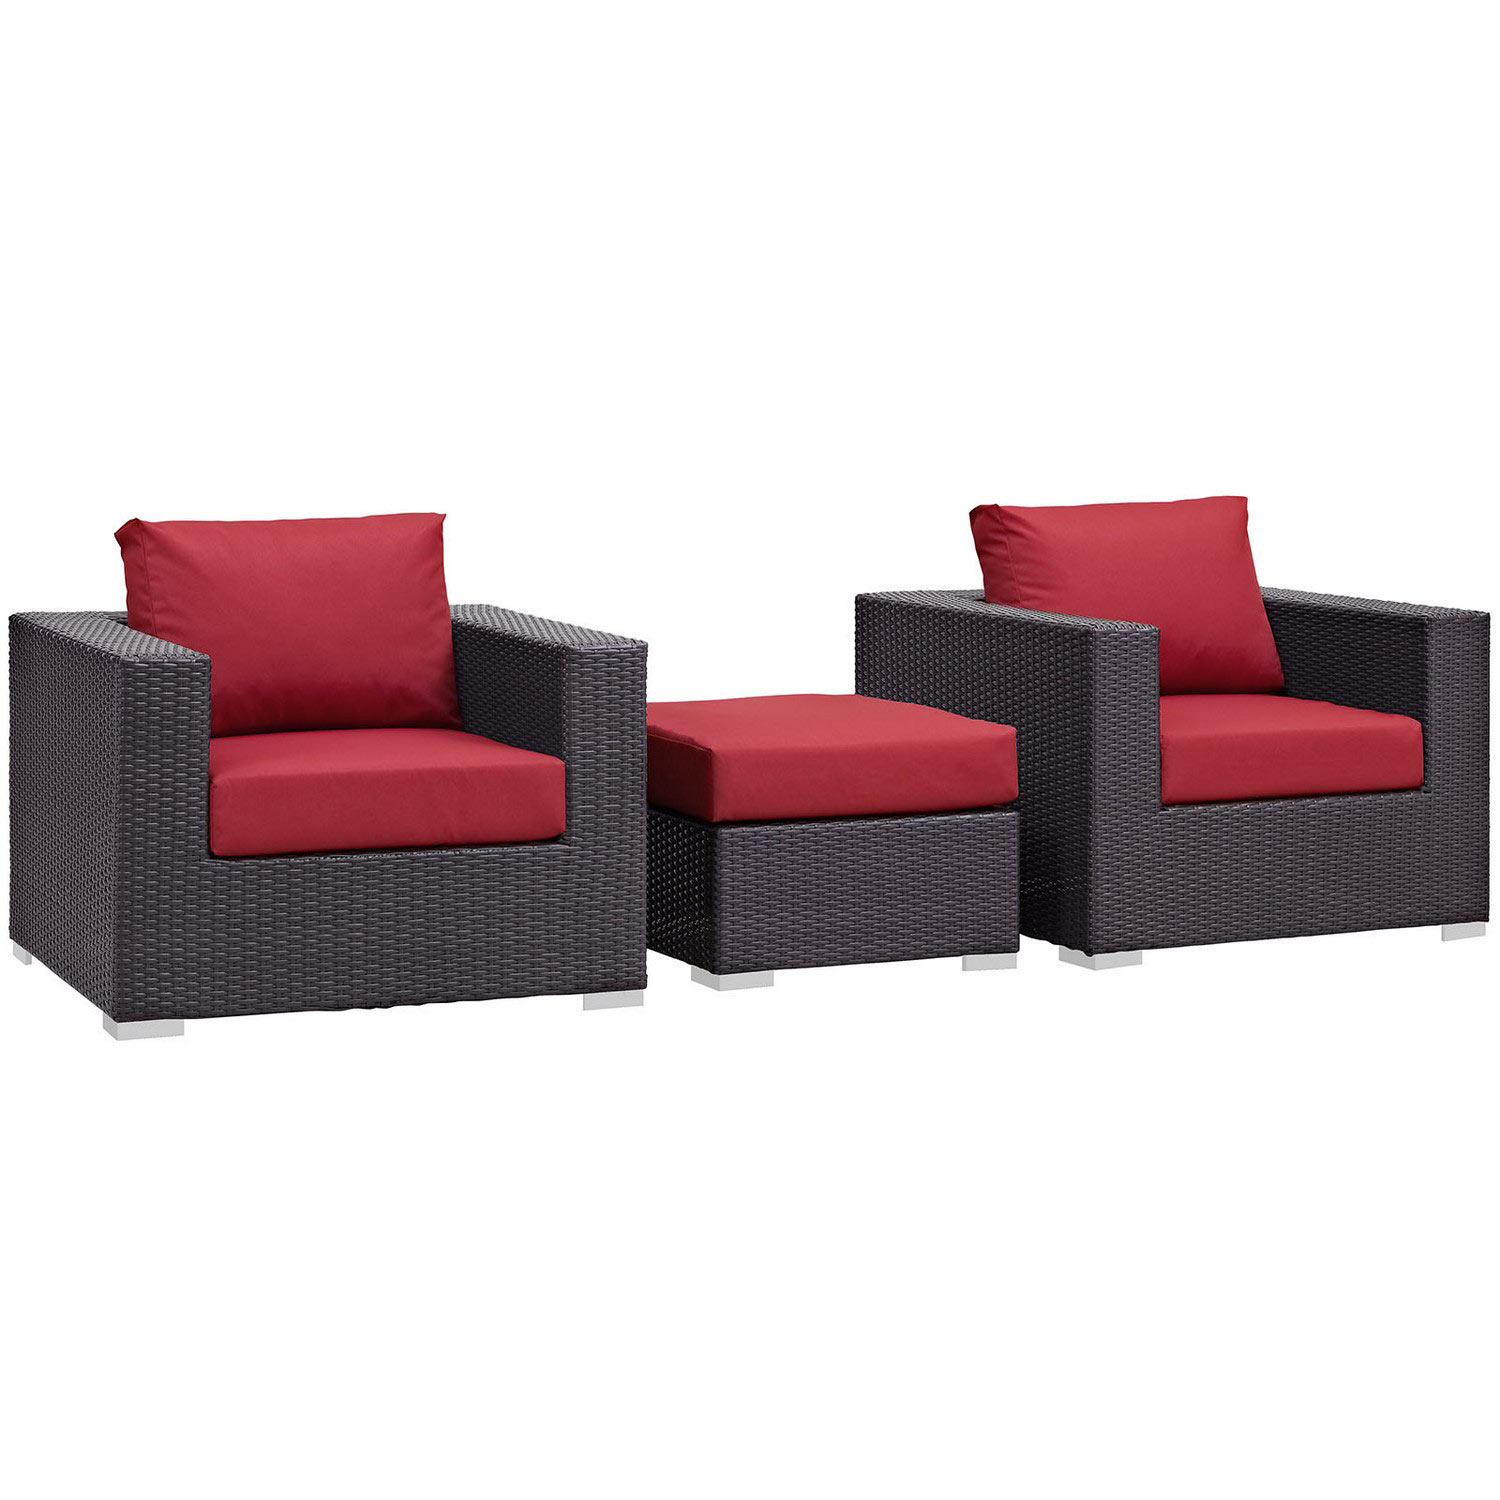 Modway Convene 3 Piece Outdoor Patio Sofa Set - Espresso Red